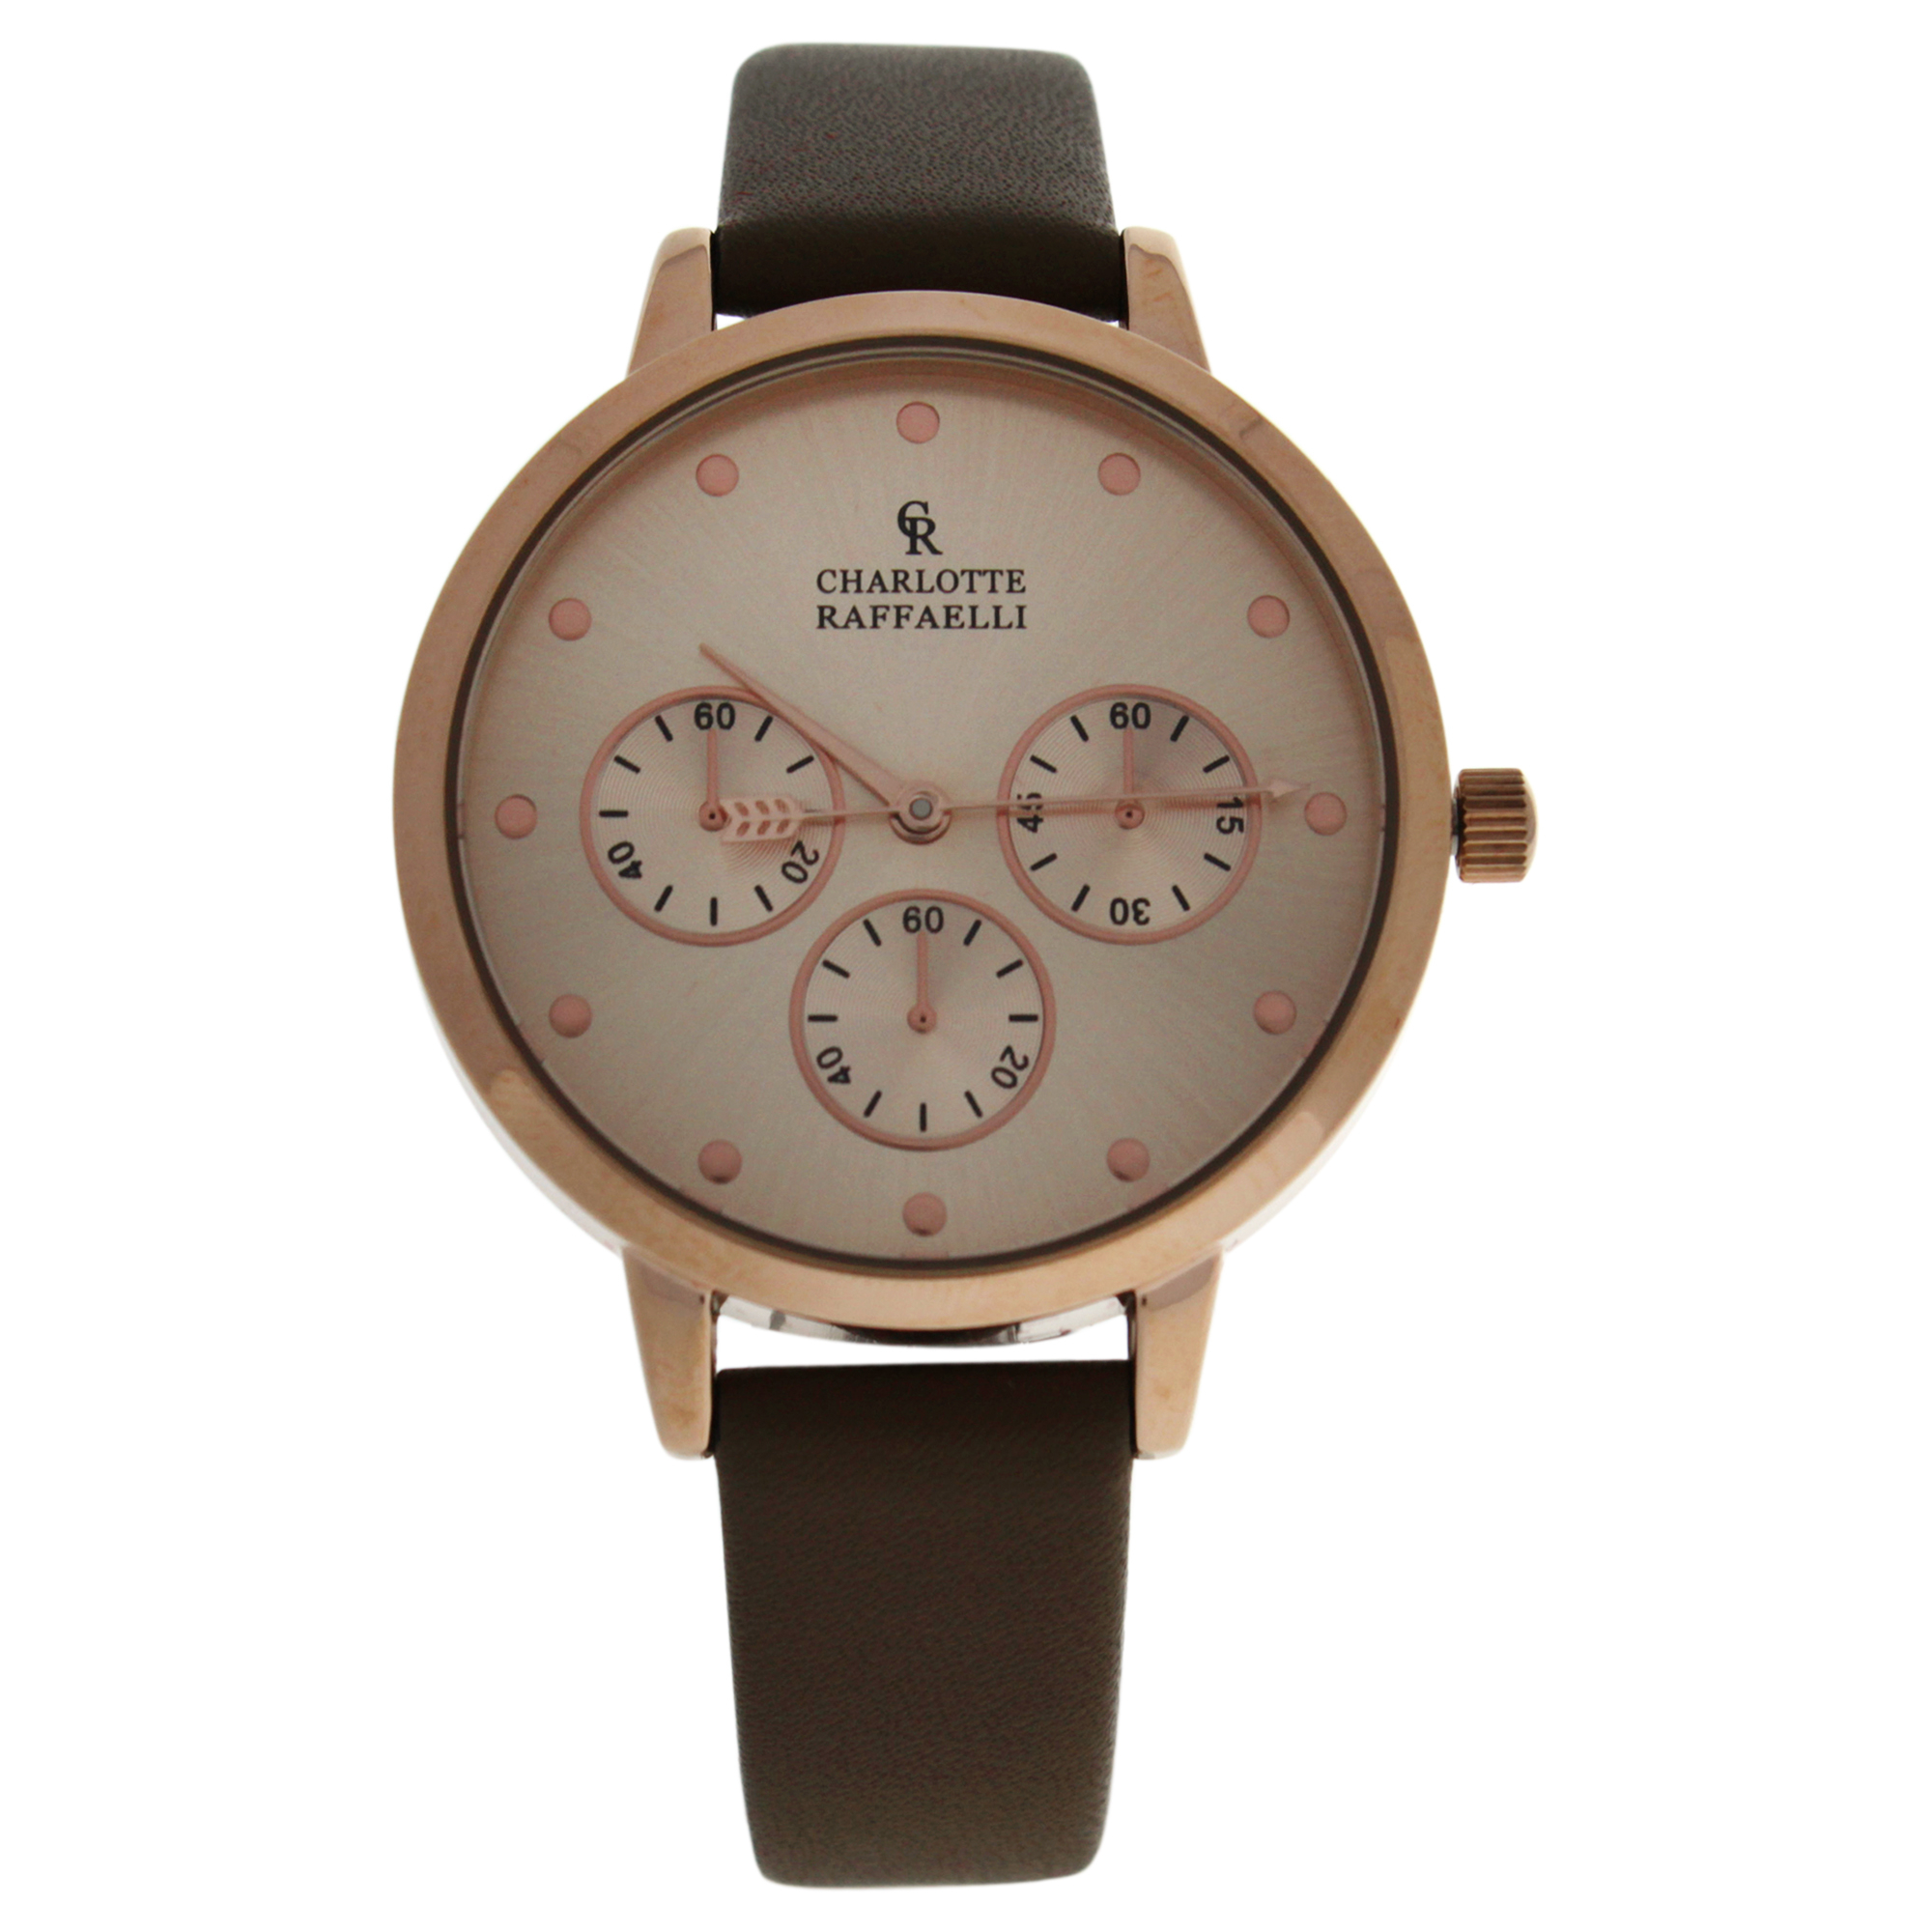 CRB015 La Basic - Rose Gold/Brown Leather Strap Watch by Charlotte Raffaelli for Women - 1 Pc Watch